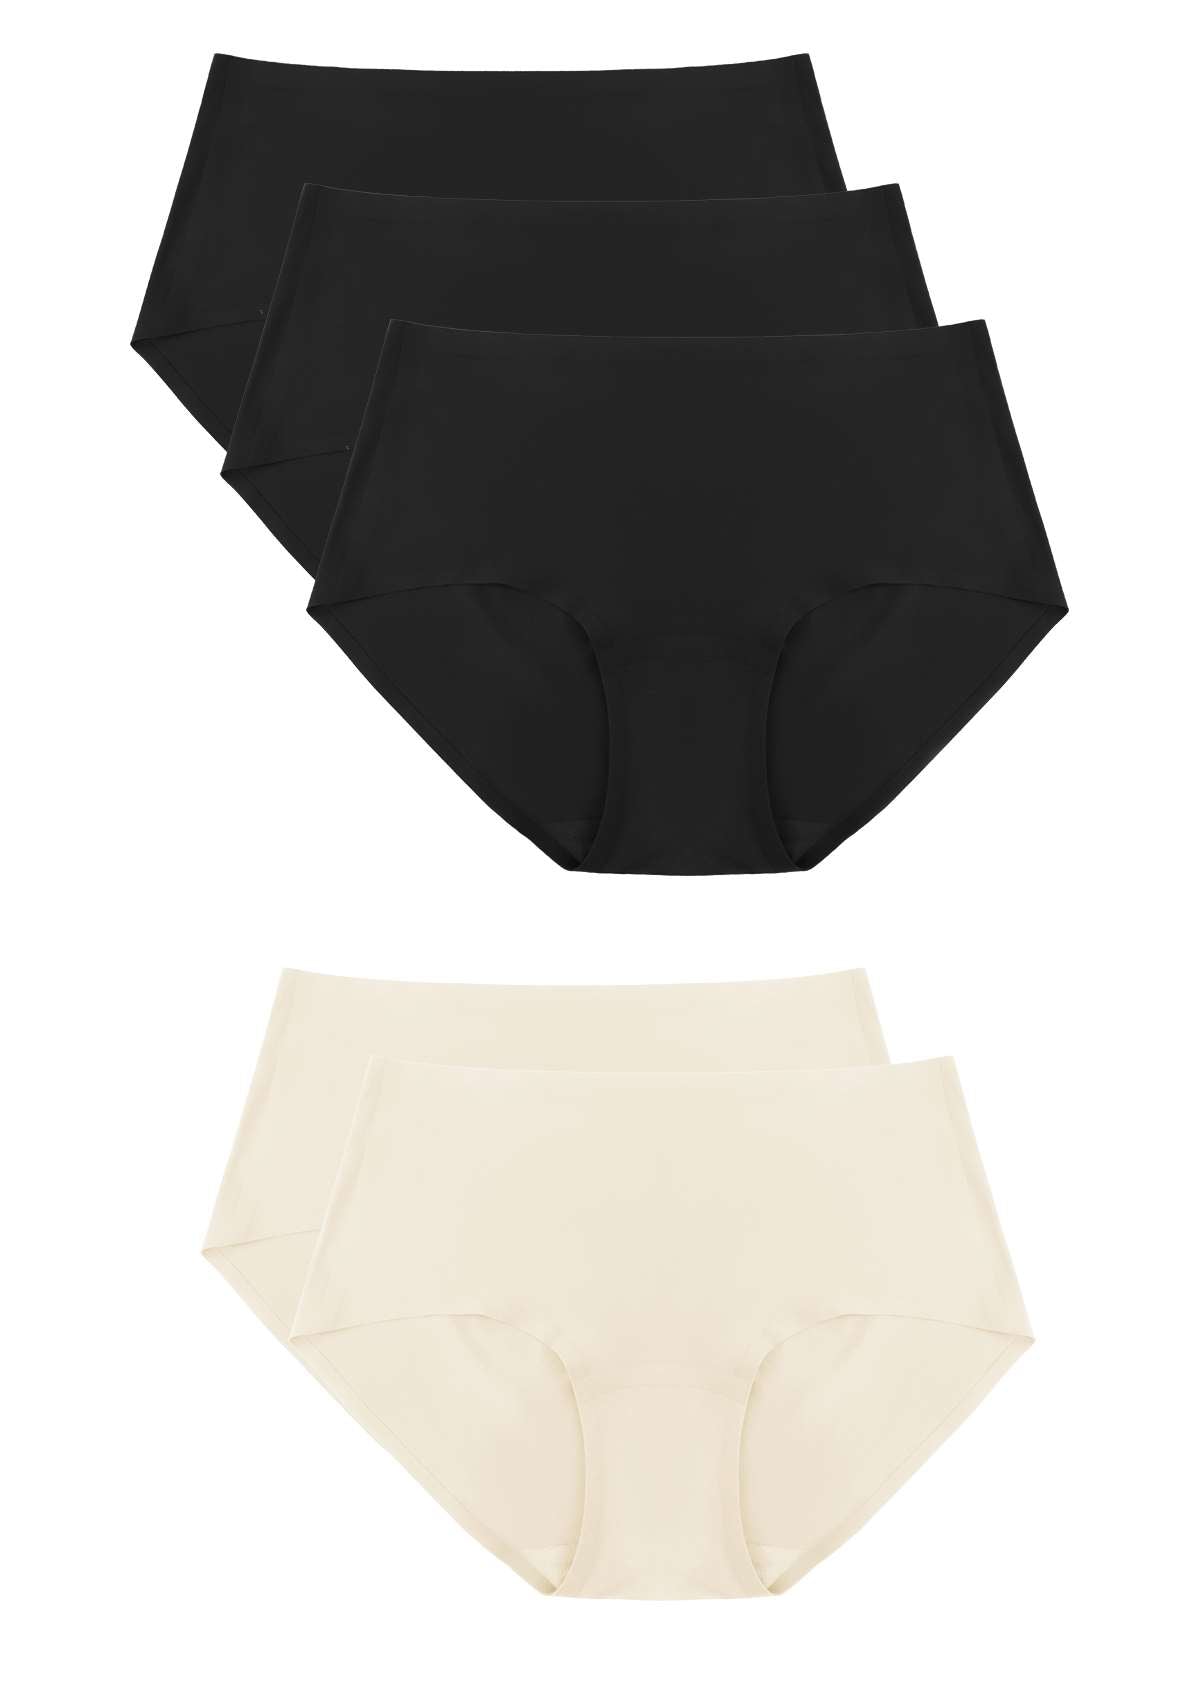 HSIA FlexiFit Soft Stretch Seamless Brief Underwear Bundle - 5 Packs/$20 / L-2XL / 3*Black+2*Peach Beige